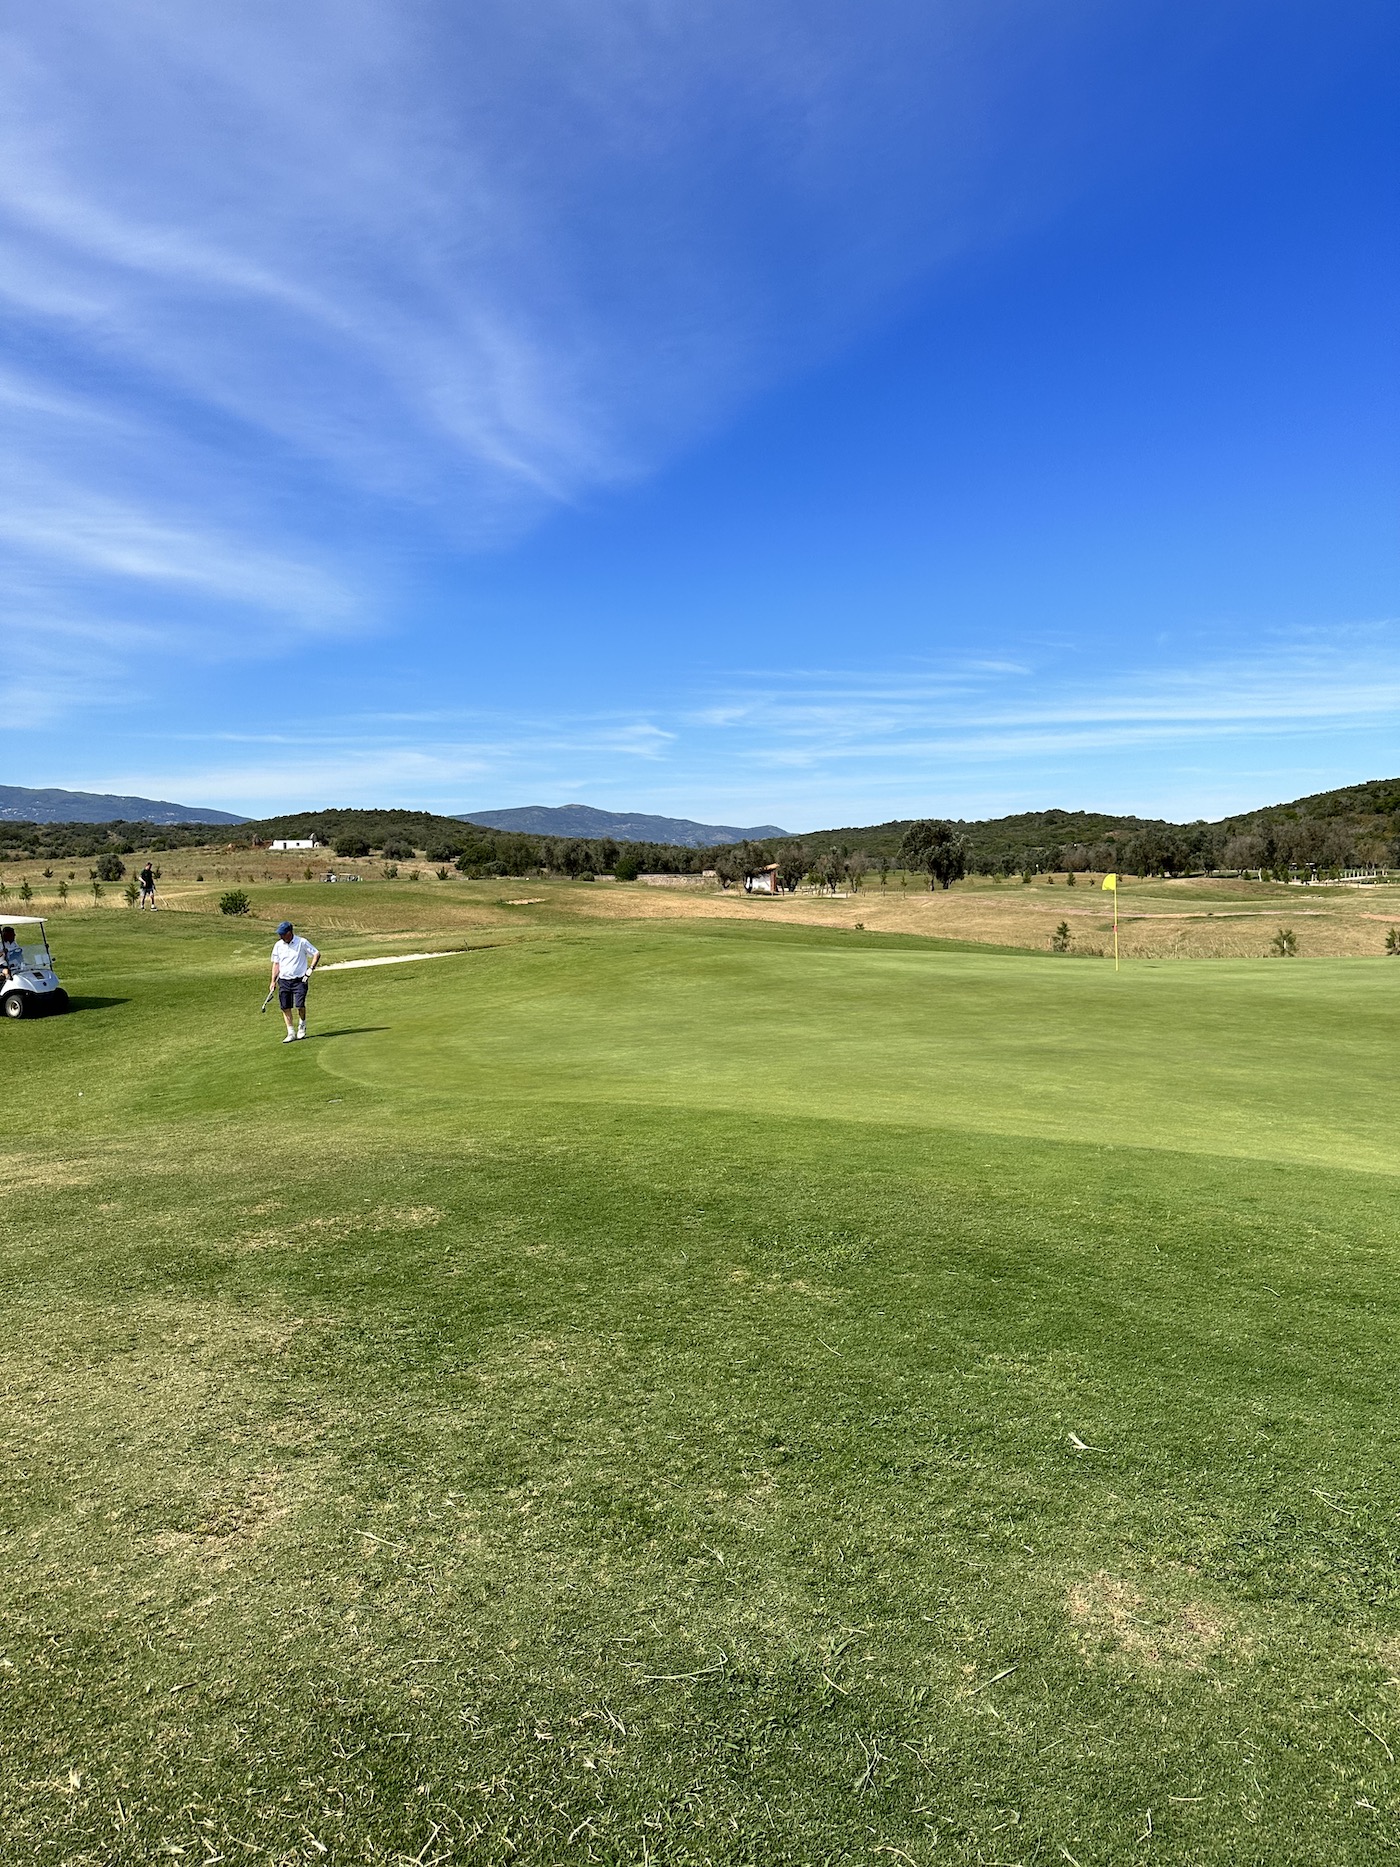 Alamos Golf Course